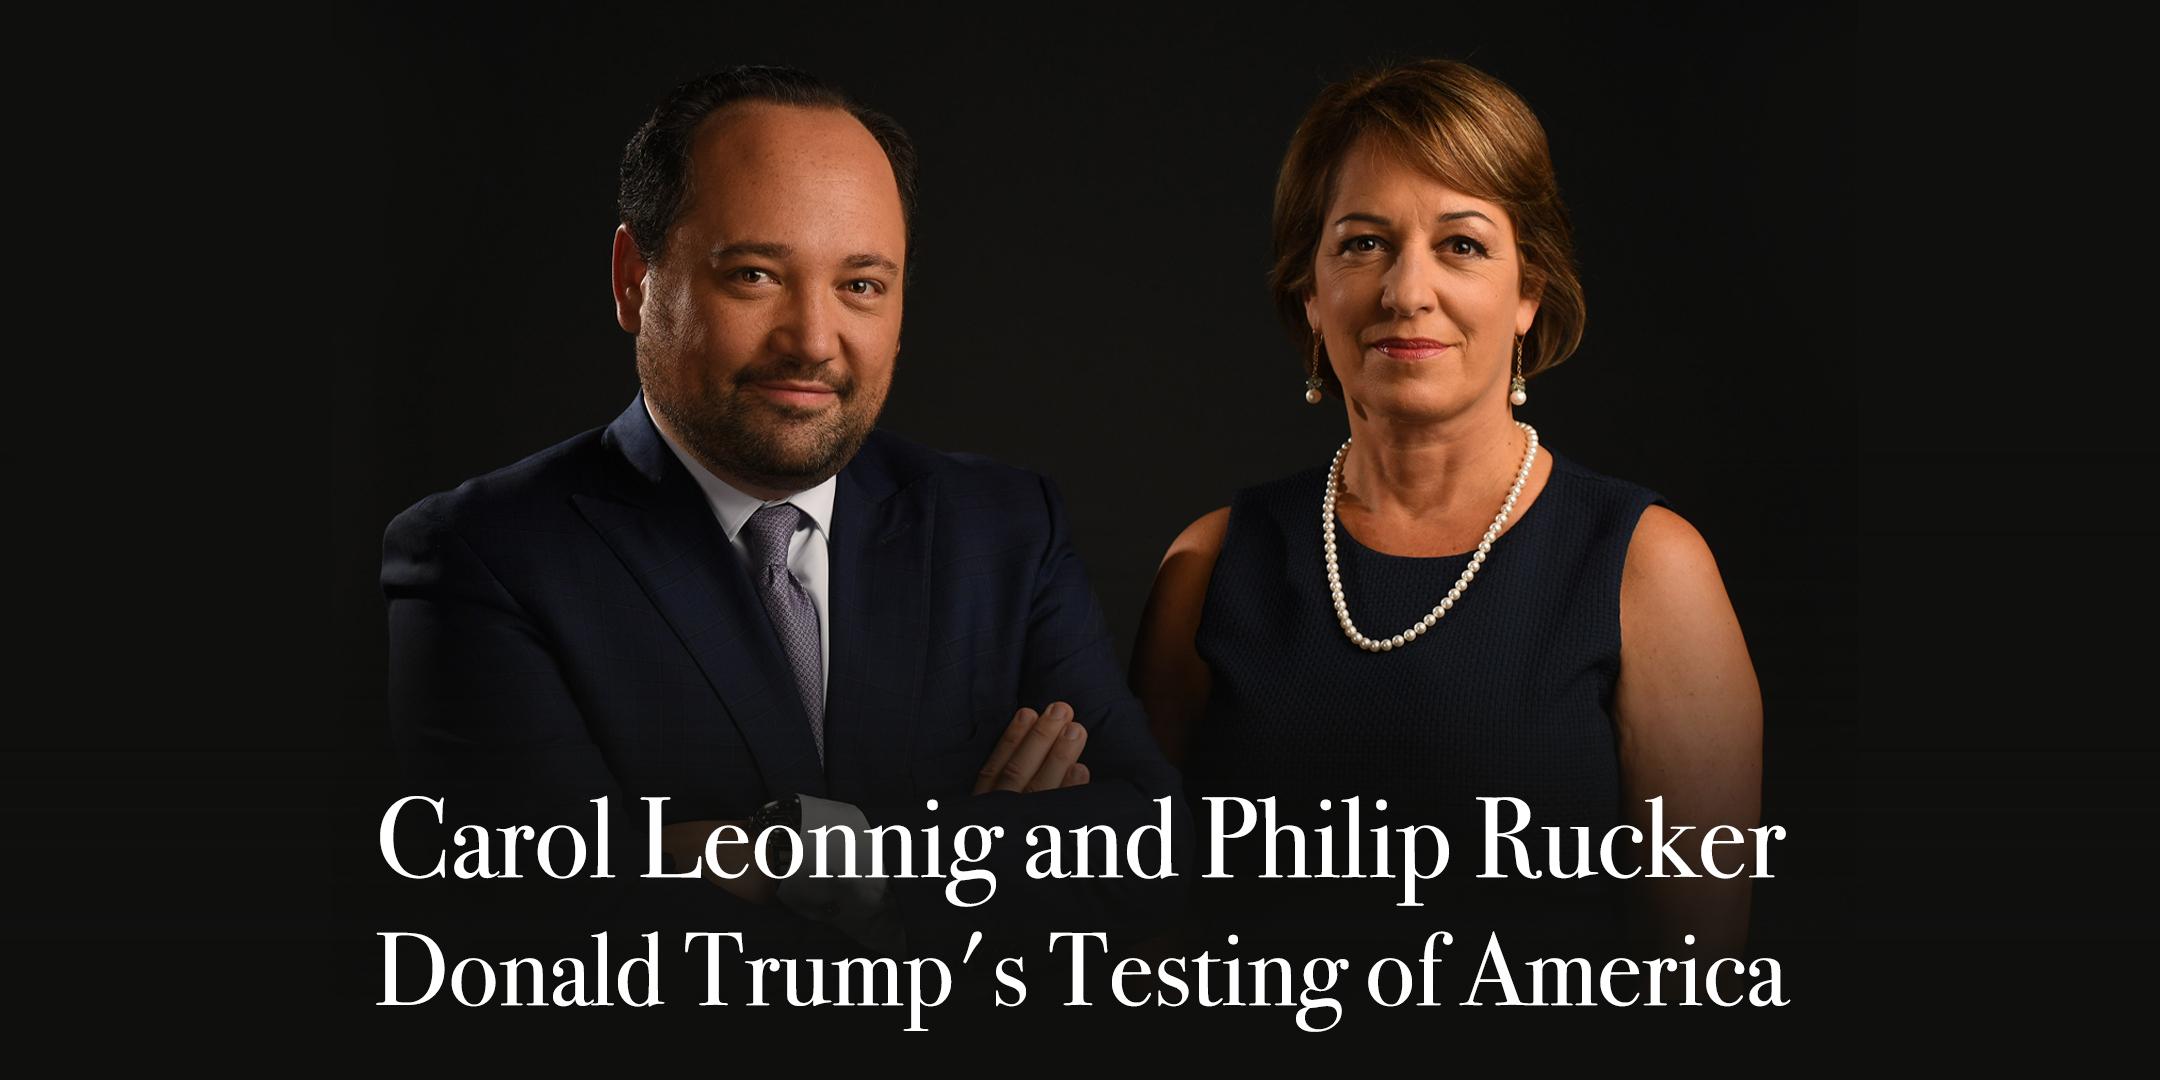 Carol Leonnig and Philip Rucker: Donald Trump's Testing of America